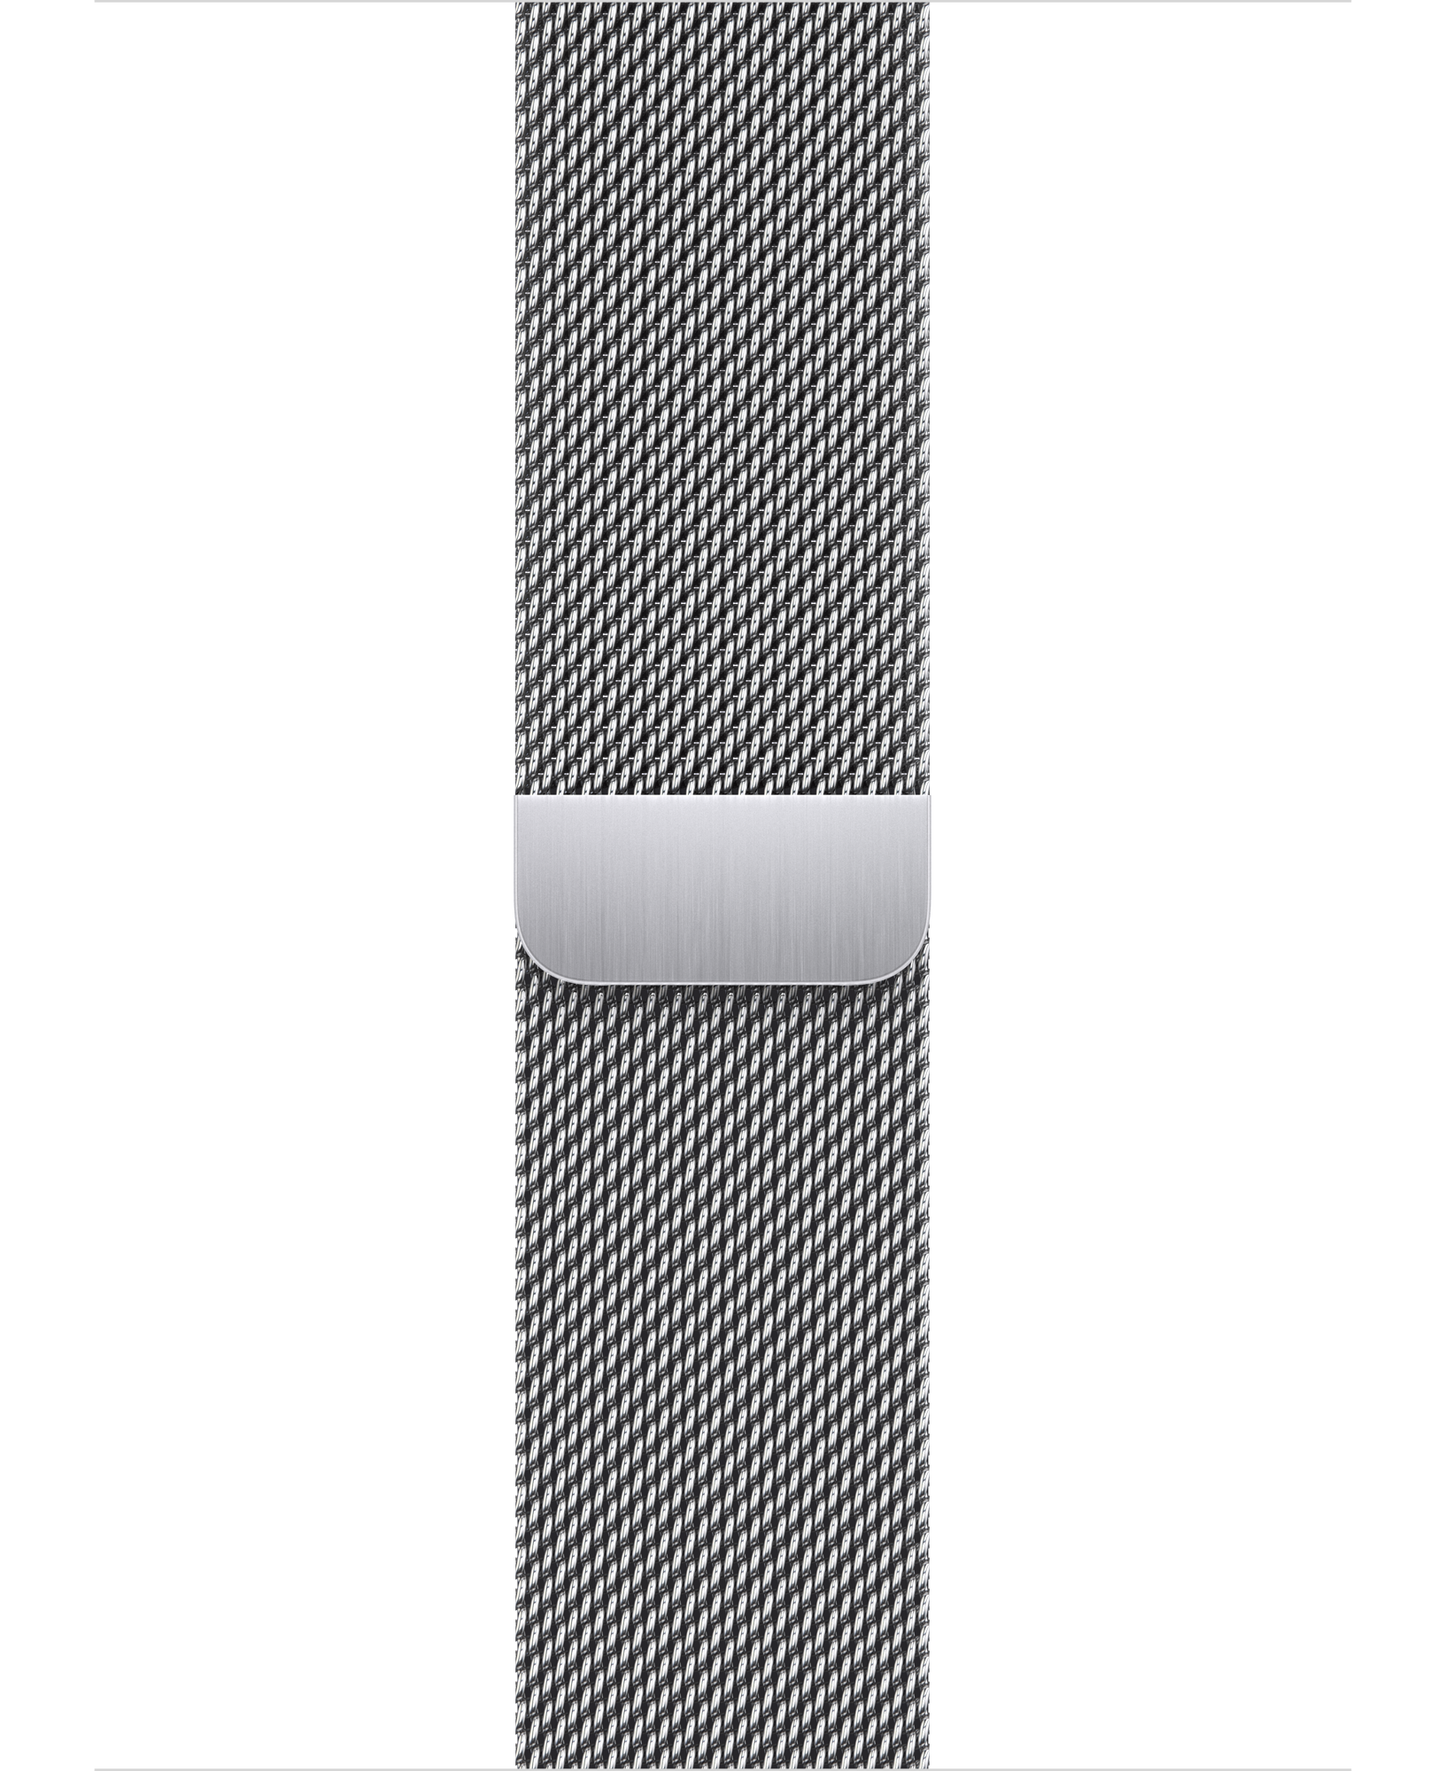 حزام Loop ميلانيز Silver لساعة Apple Watch مقاس 45 مم